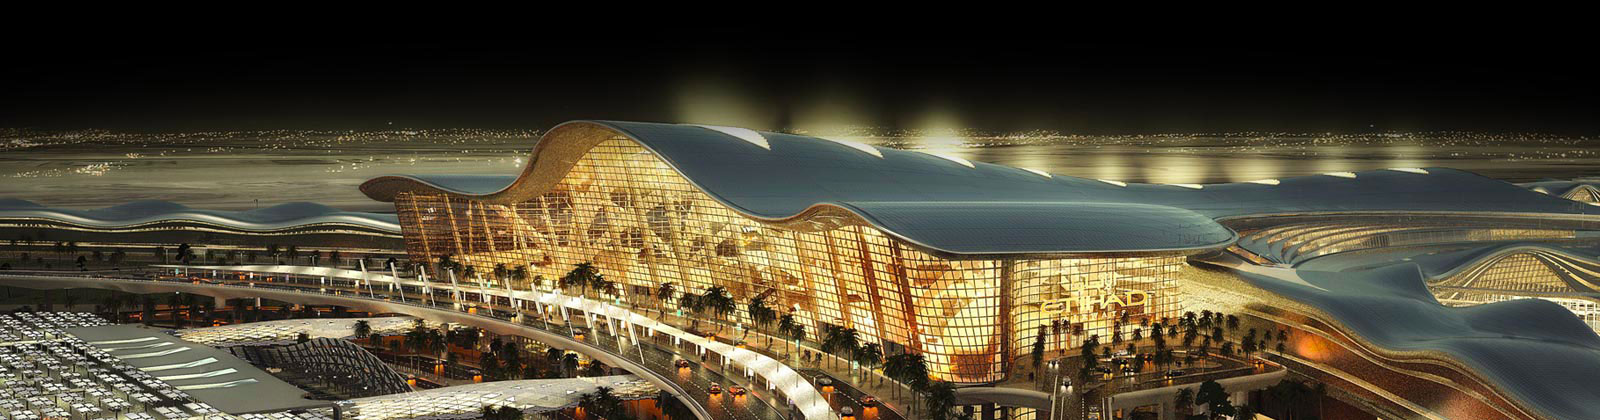 Abu Dhabi International Airport 4